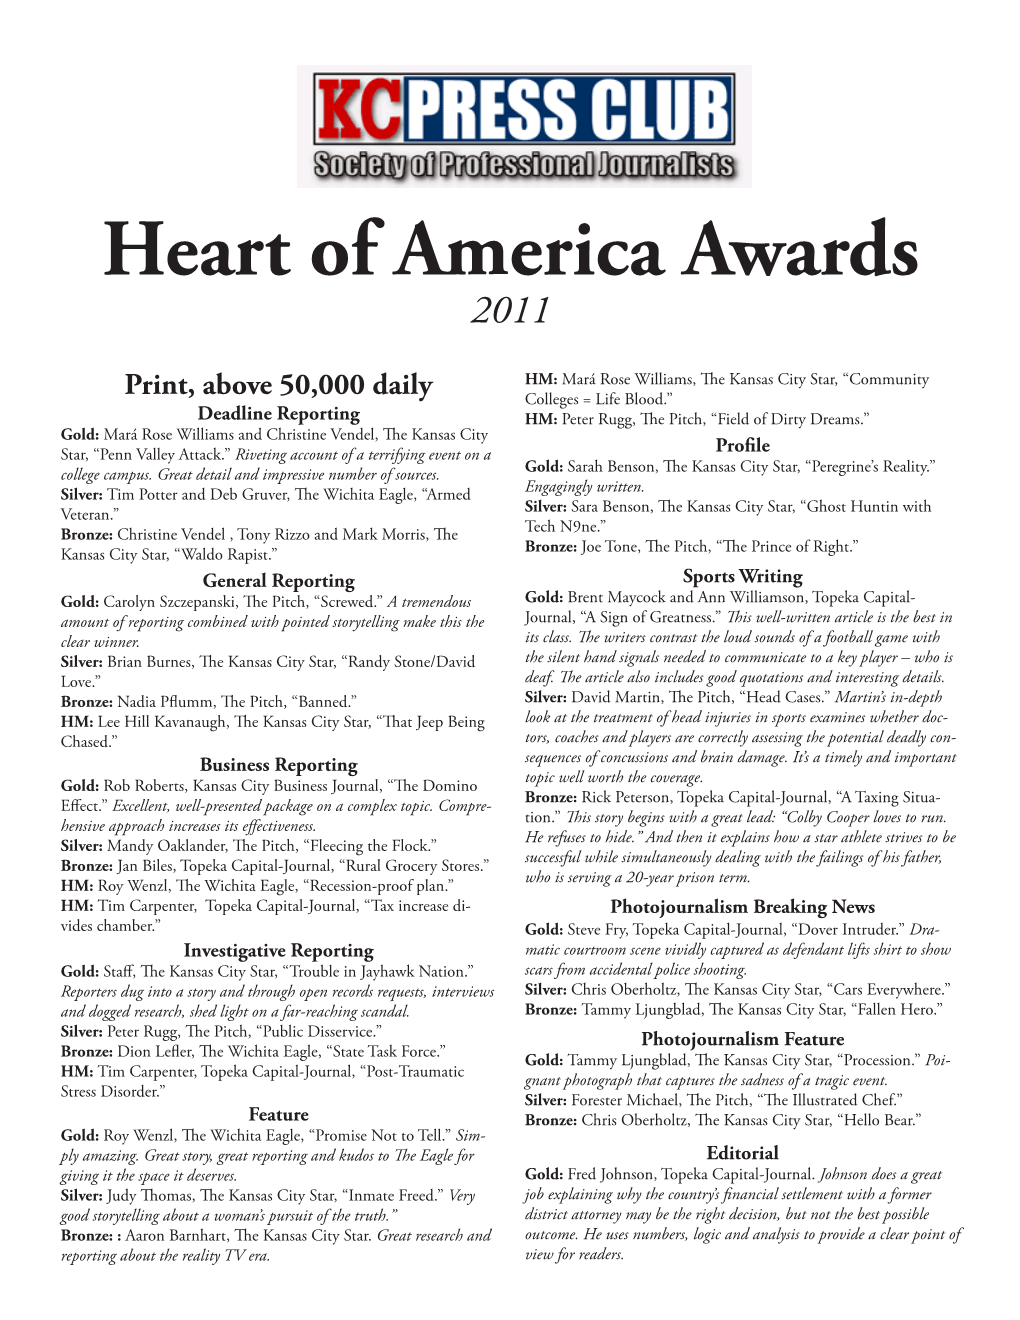 Heart of America Awards 2011